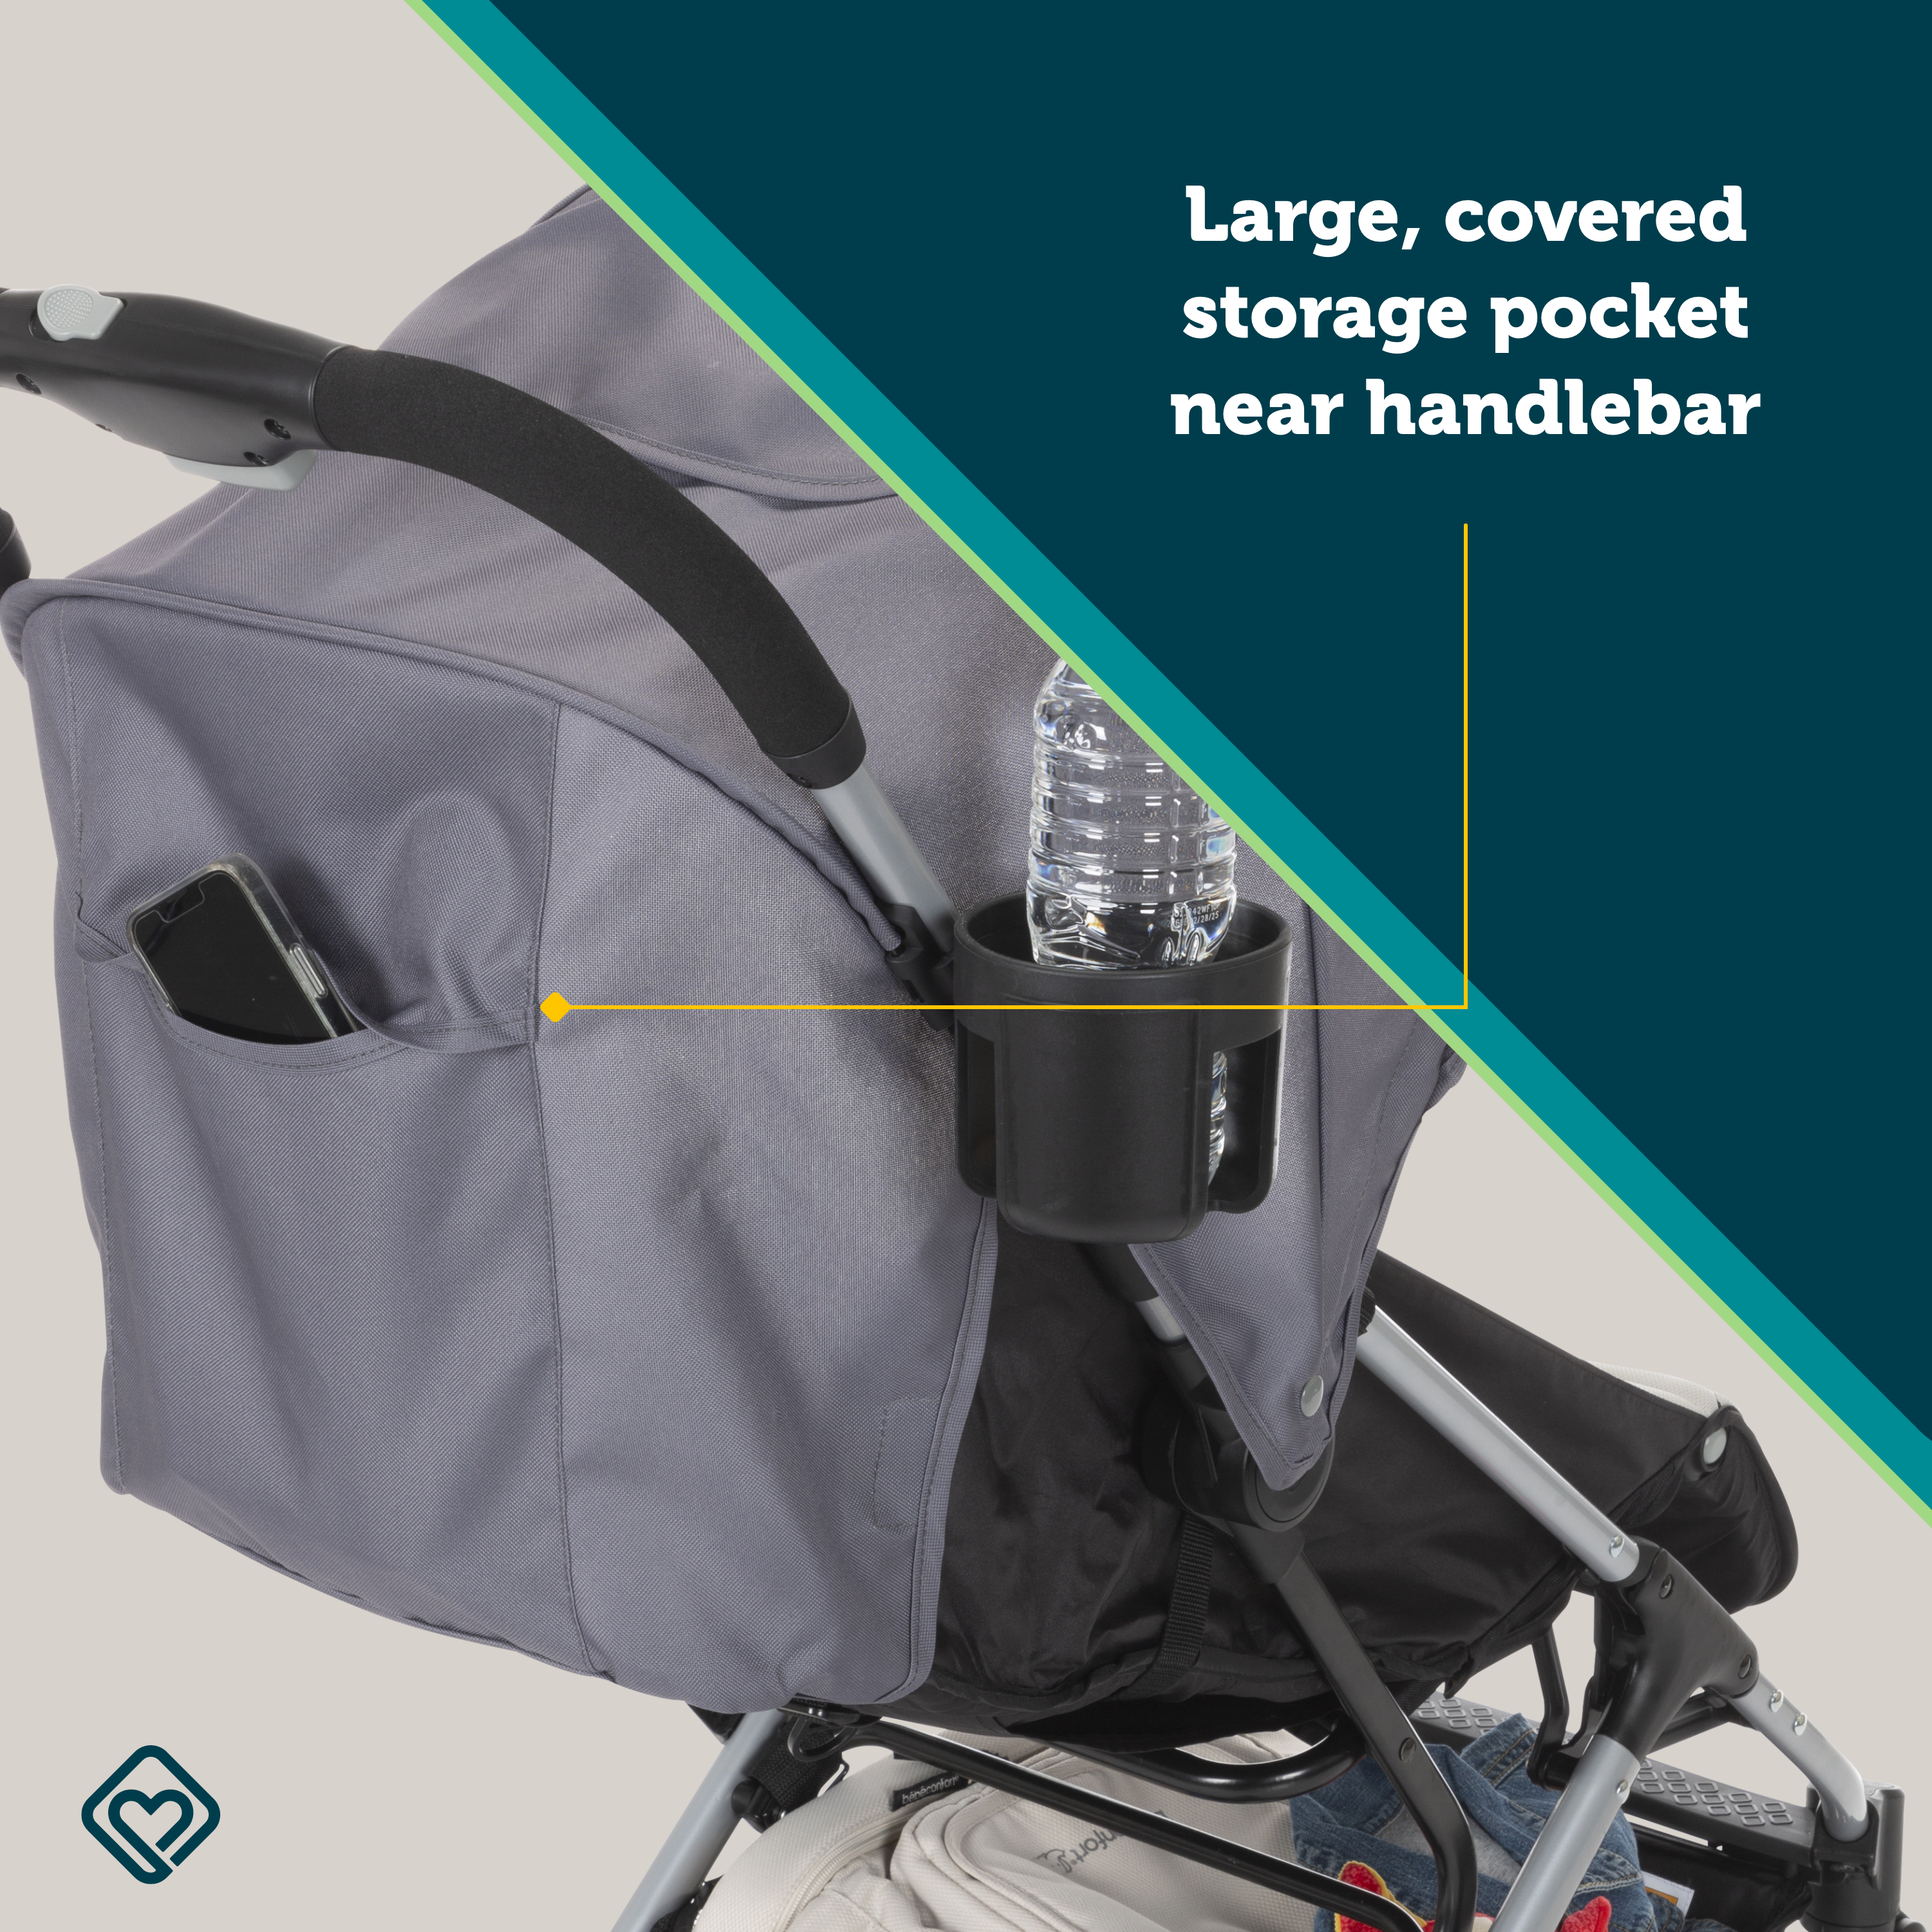 Easy-Fold Compact Stroller - large, covered storage pocket near handlebar